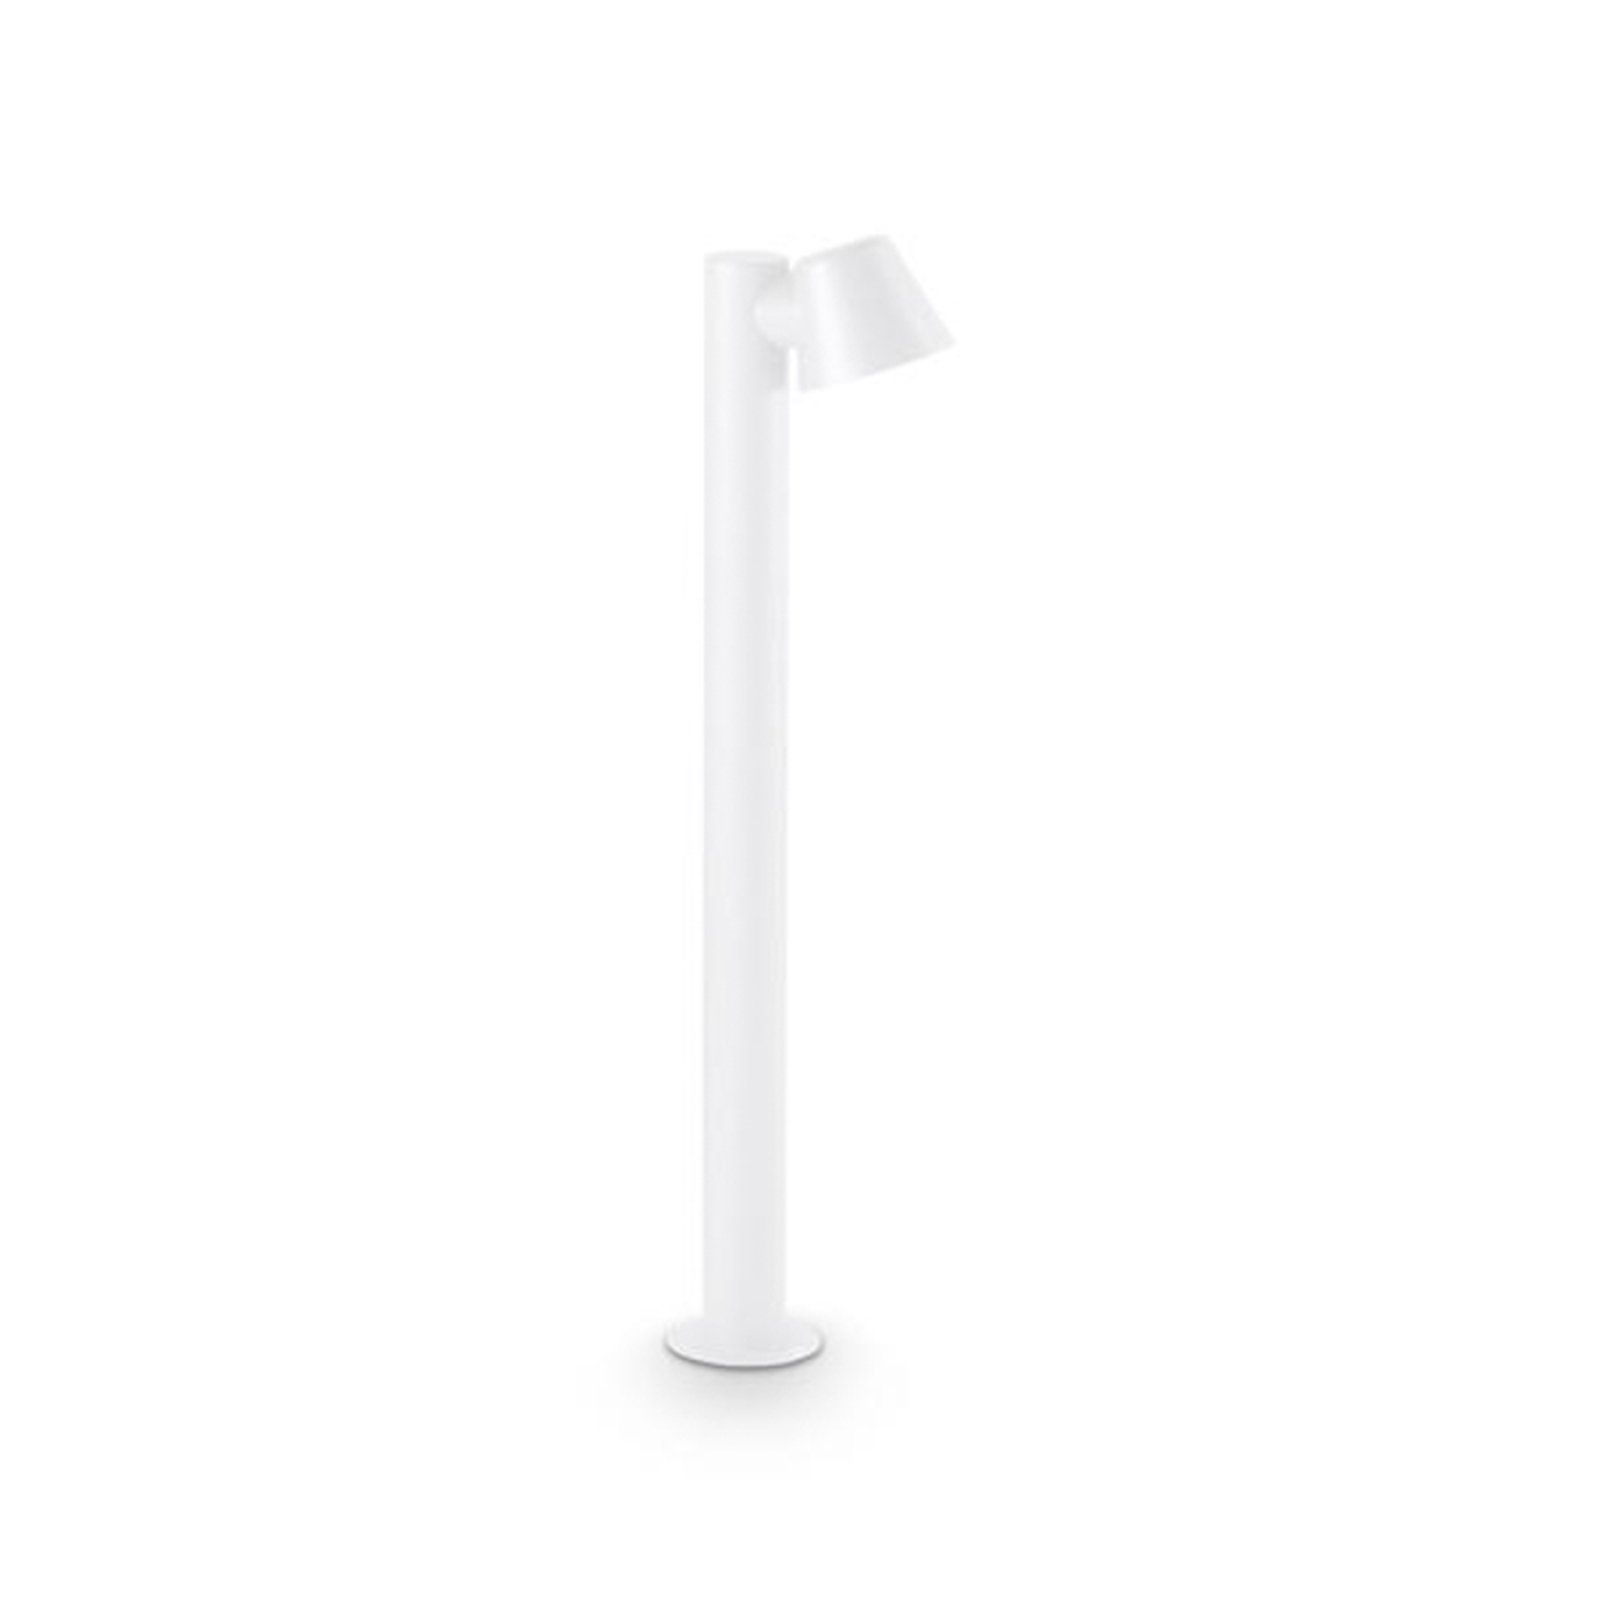 Ideal Lux veilampe gass, hvit, aluminium, høyde 80 cm